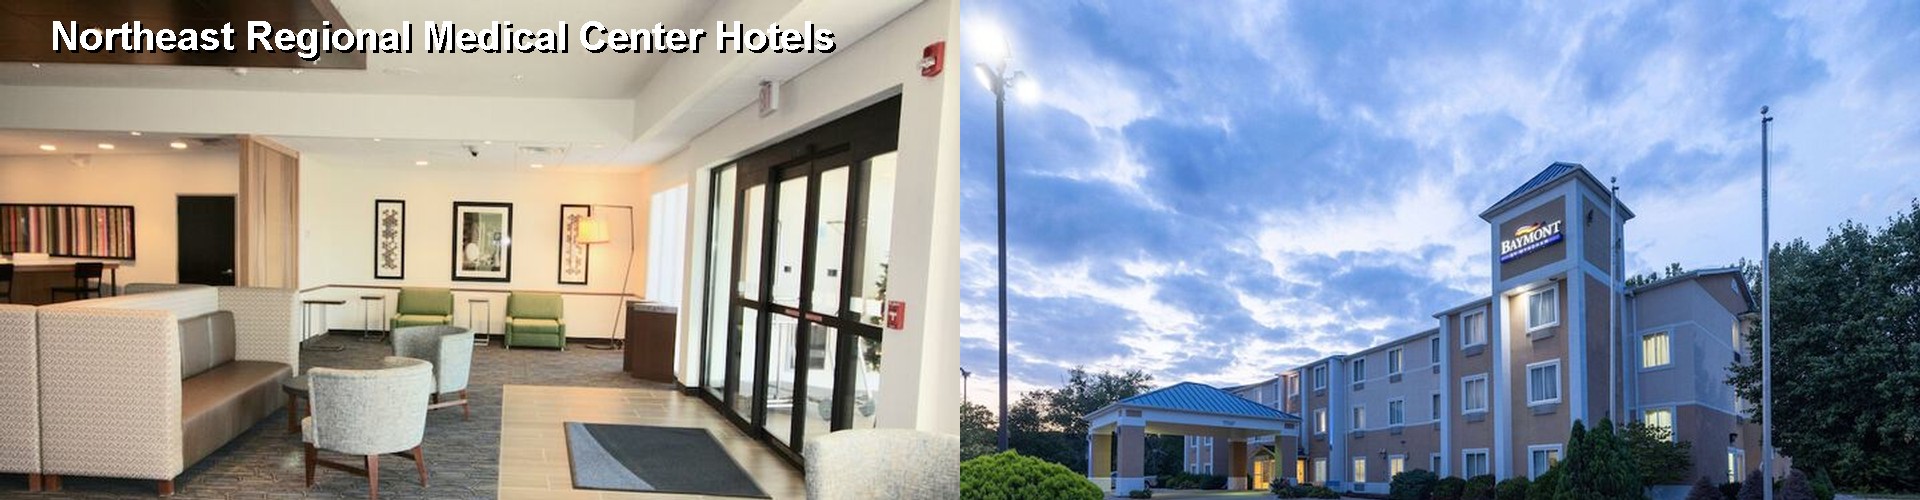 5 Best Hotels near Northeast Regional Medical Center